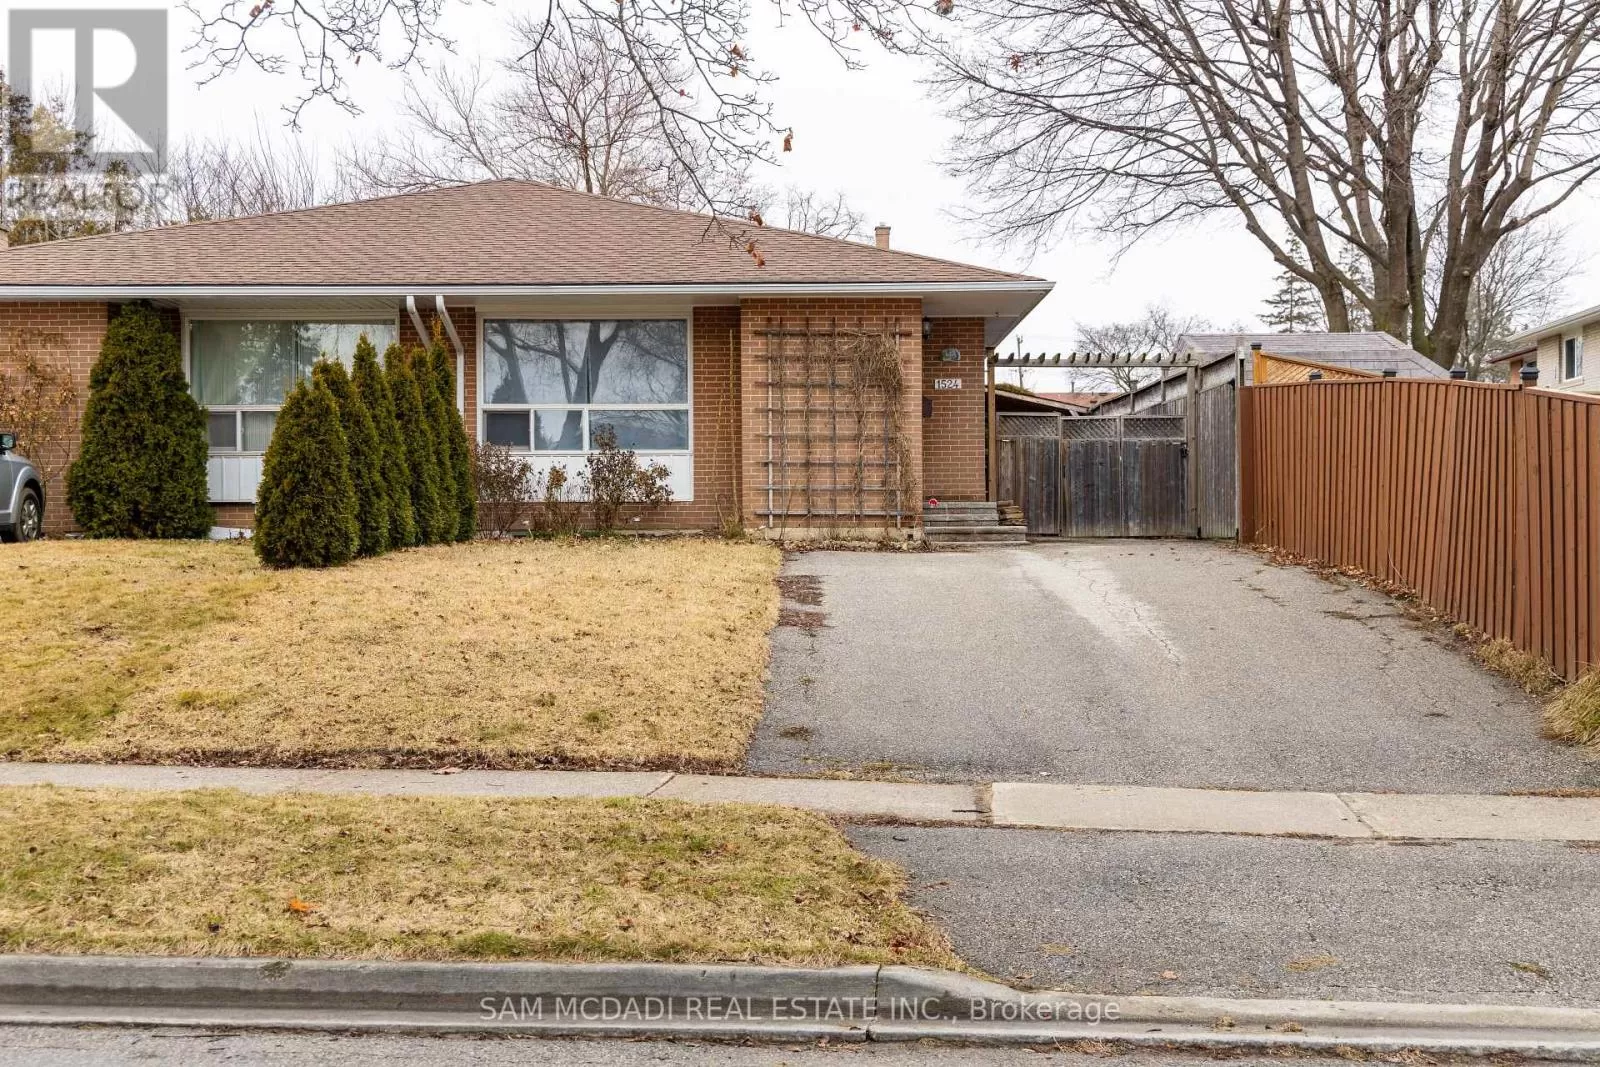 House for rent: 1524 Lewisham Dr, Mississauga, Ontario L5J 3R5